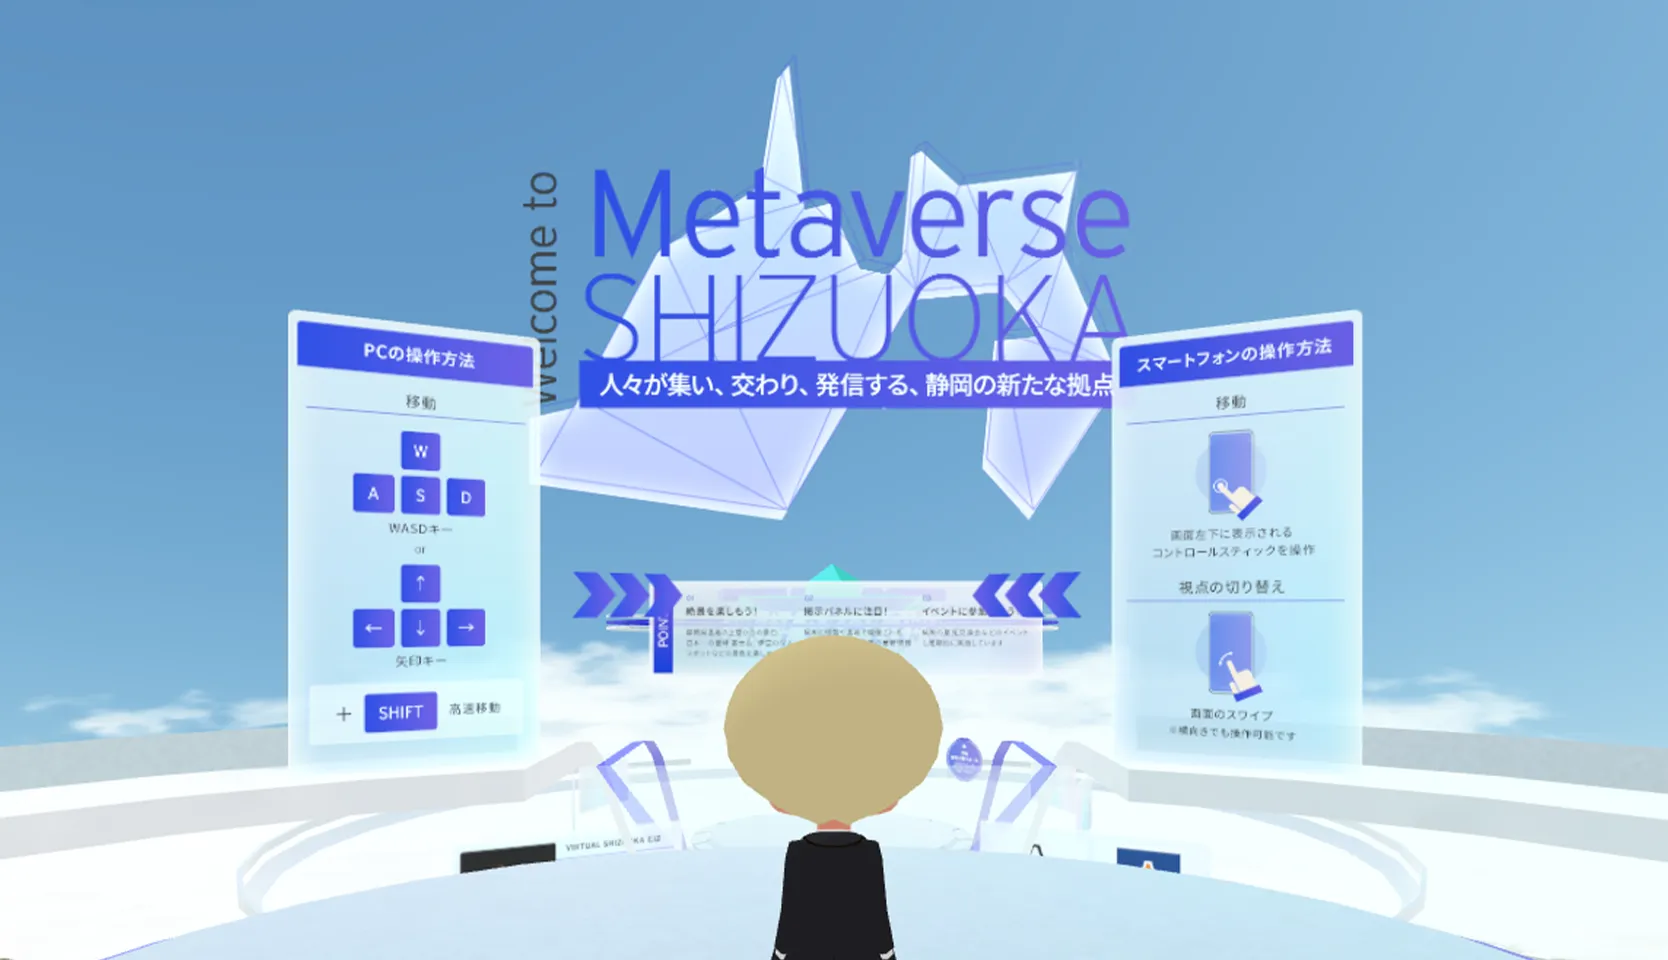 Metaverse SHIZUOKA 人々が集い、交わり、発信する、静岡の新たな拠点